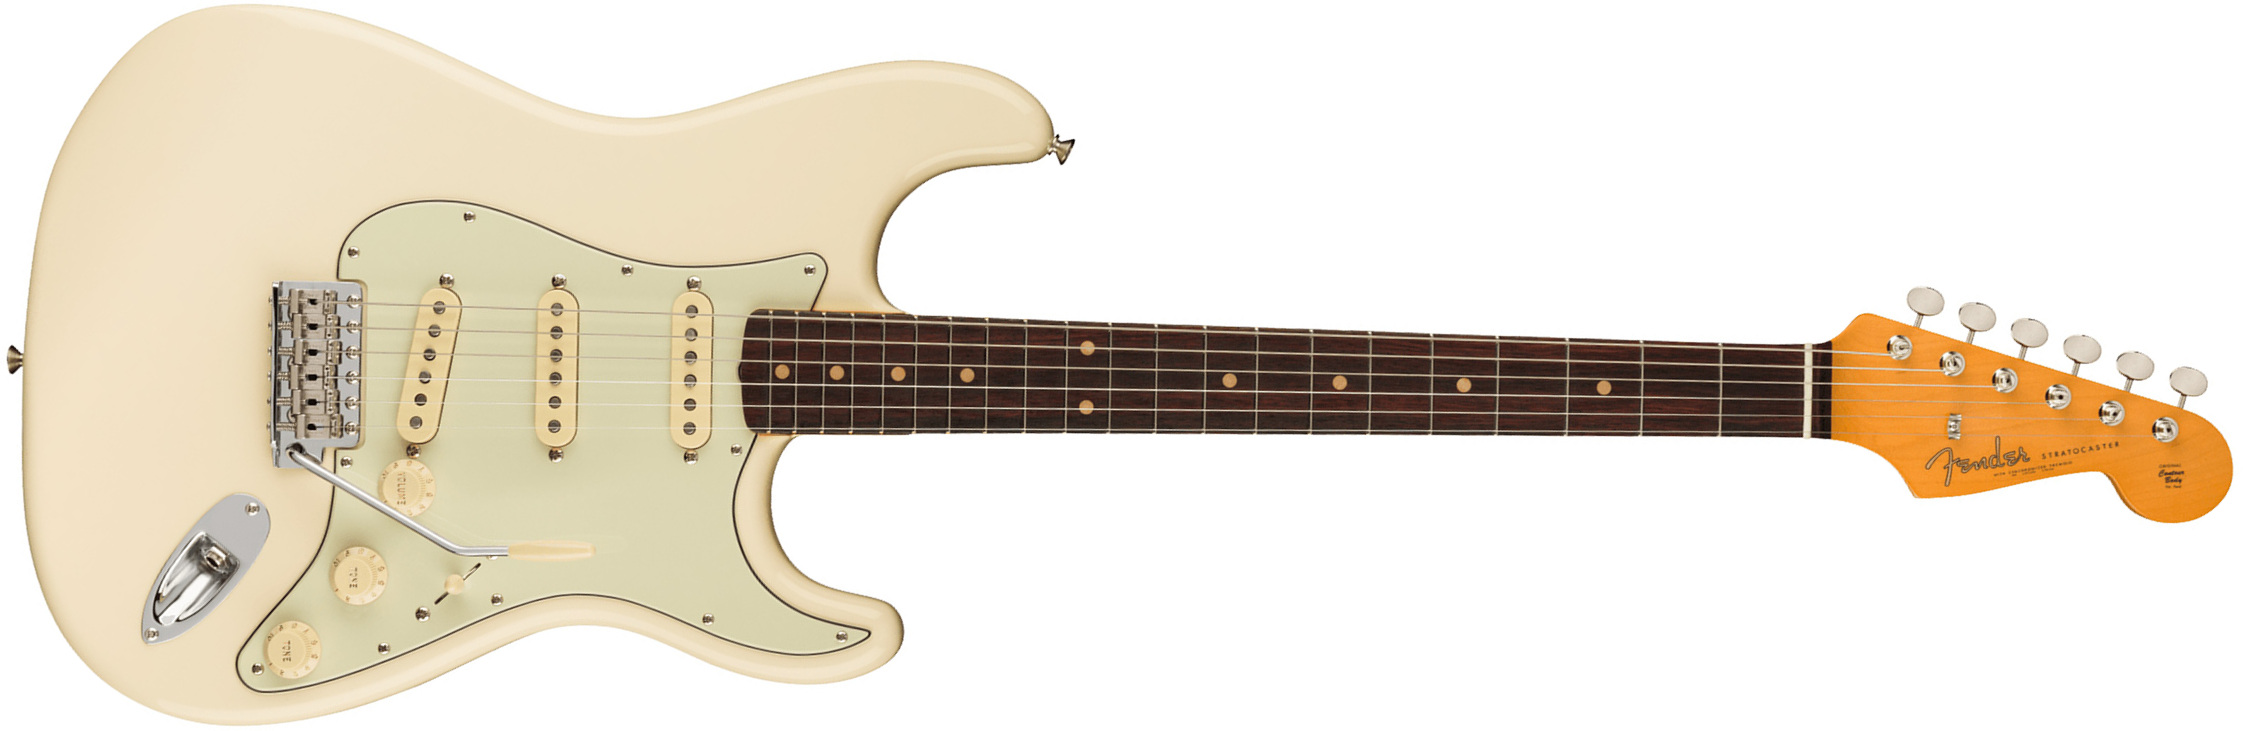 Fender Strat 1961 American Vintage Ii Usa 3s Trem Rw - Olympic White - Guitarra eléctrica con forma de str. - Main picture